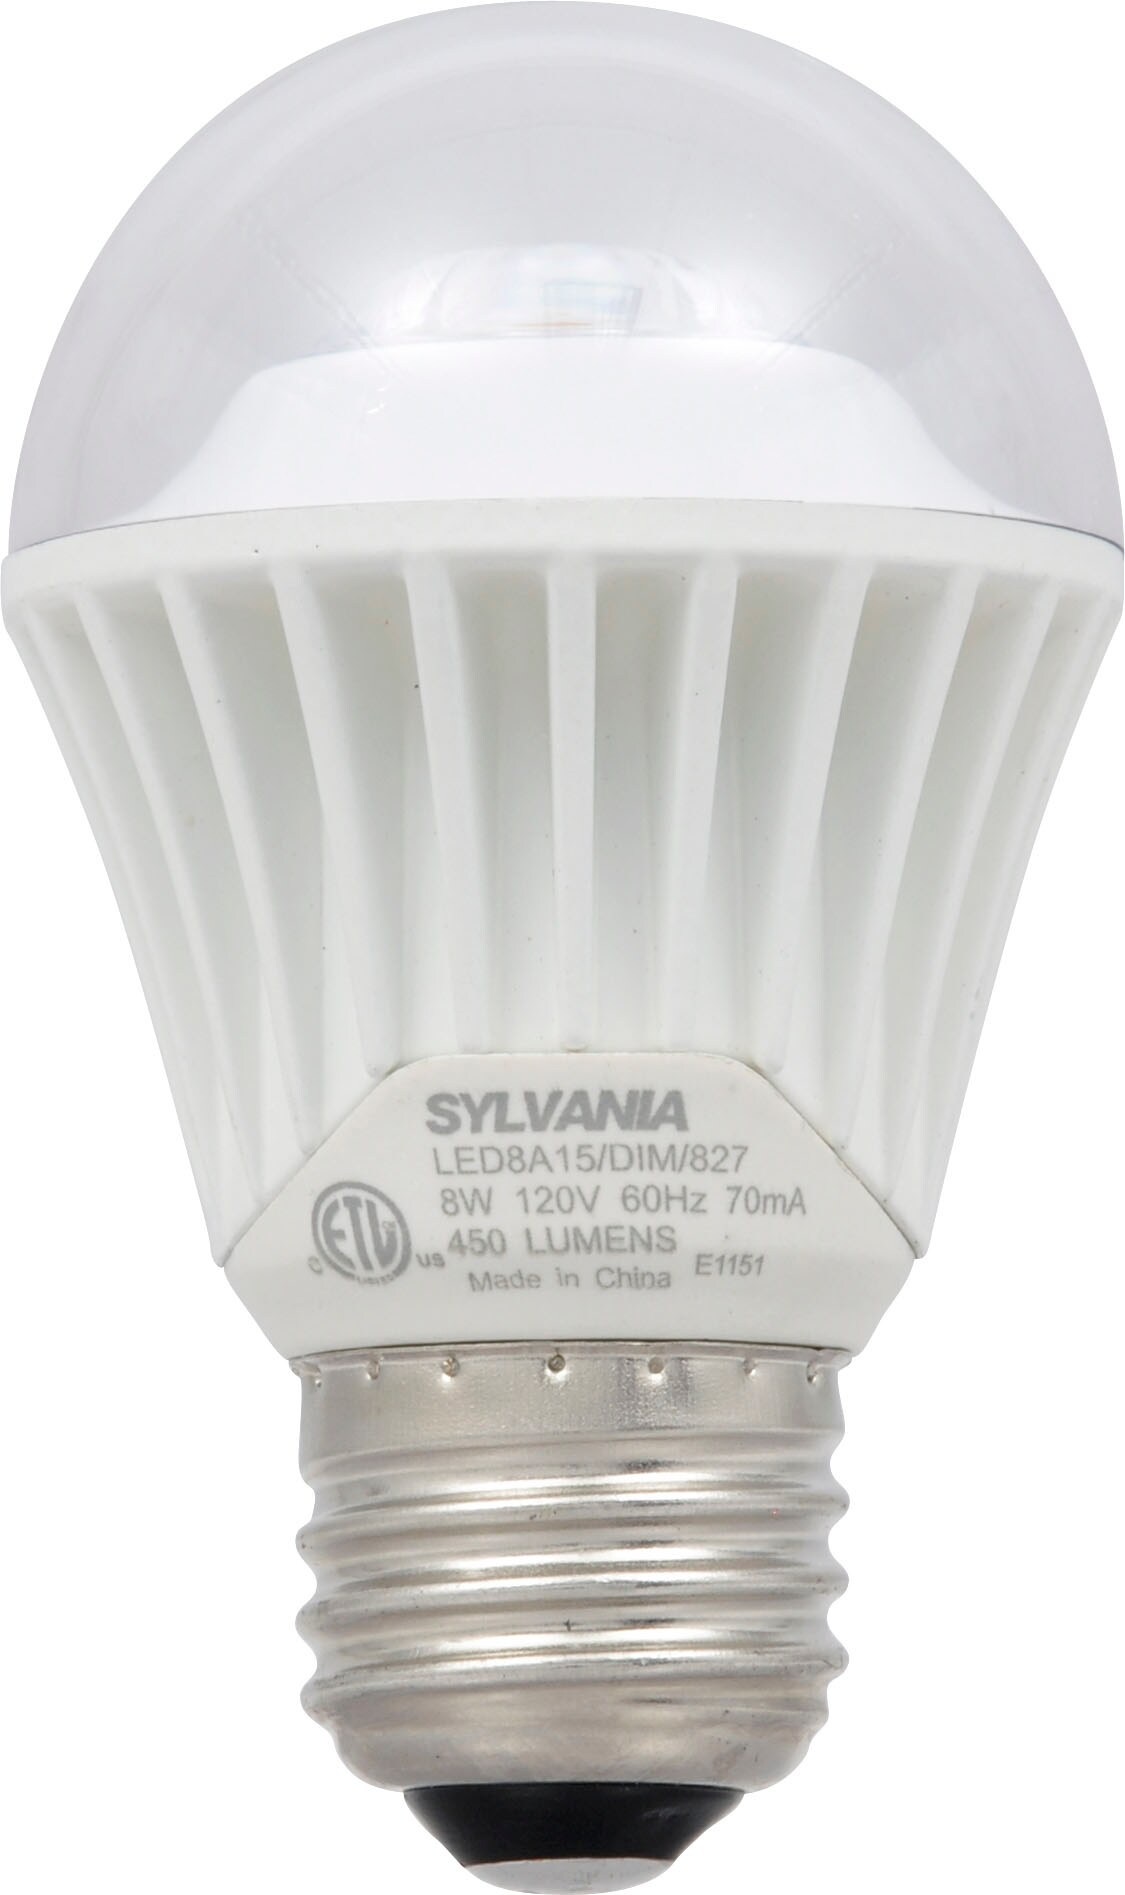 SYLVANIA Lighting 10181 40W/A15 Fan Bulb D-Light